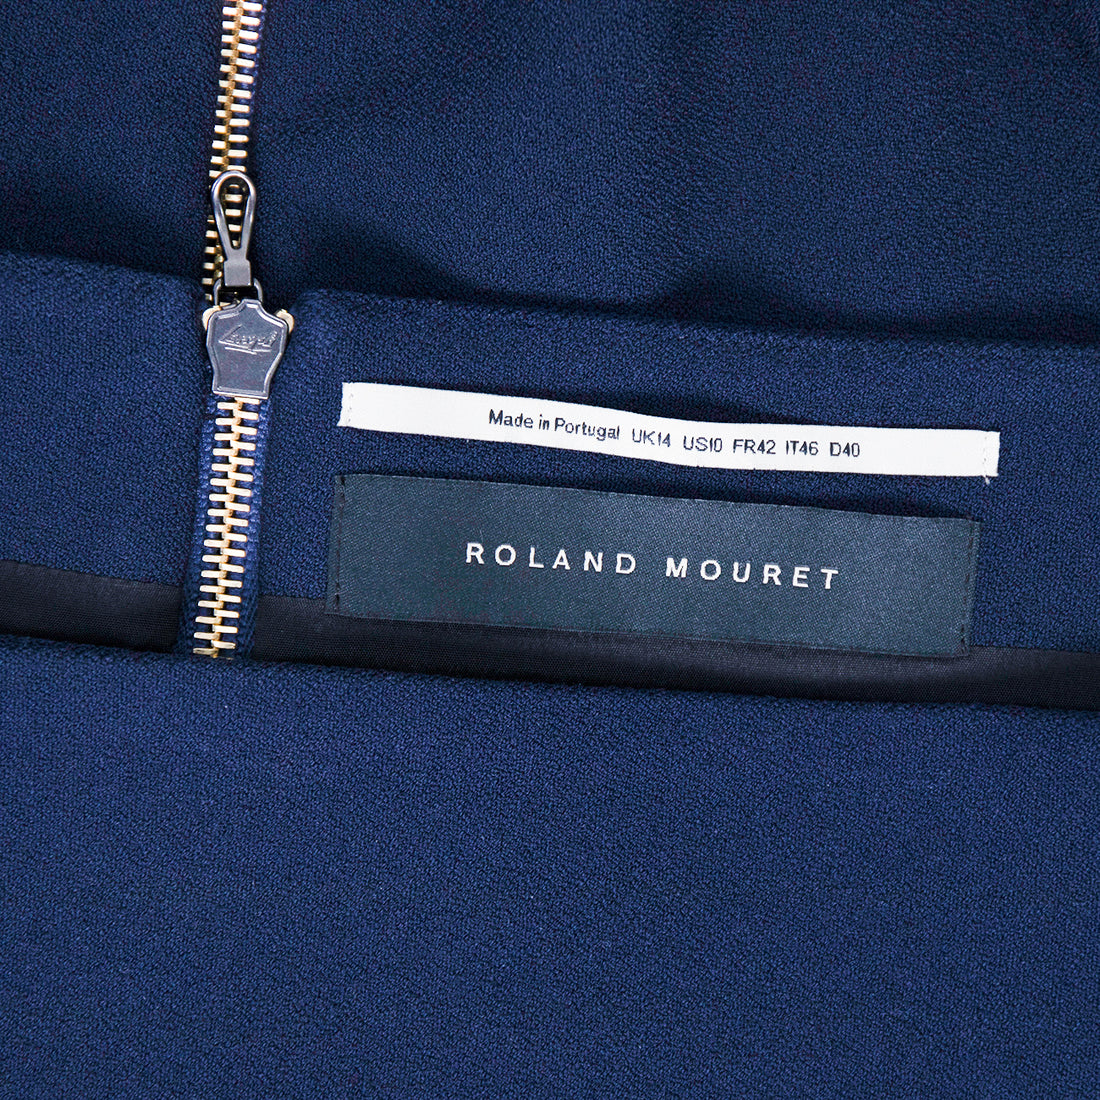 Roland Mouret peplum top in cotton crepe